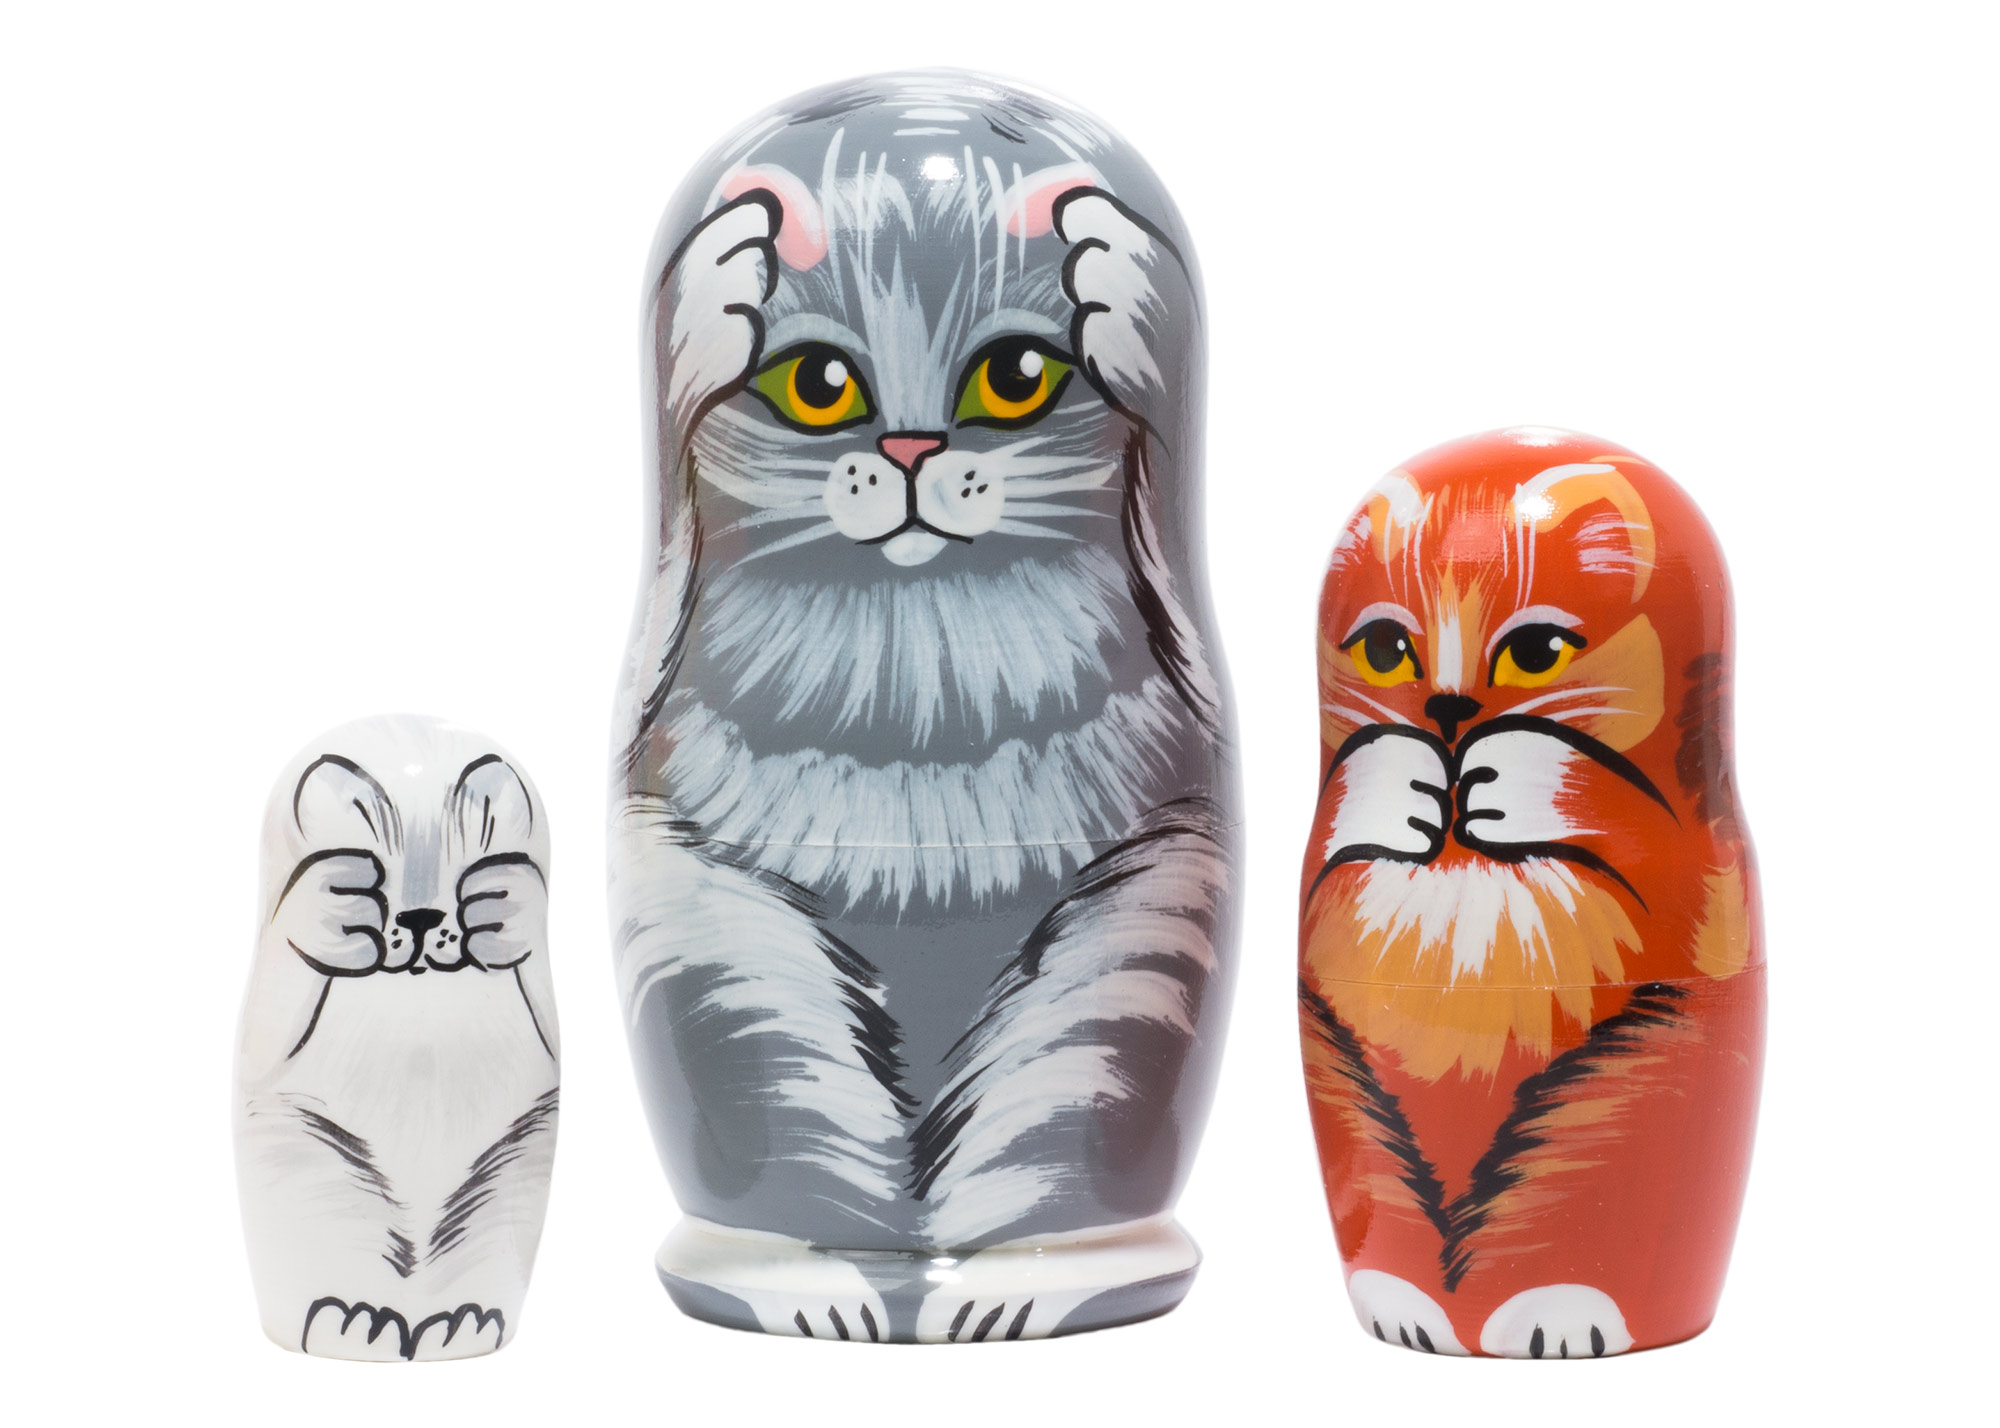 Buy Матрешка «Три котенка» 3 места 10 см at GoldenCockerel.com